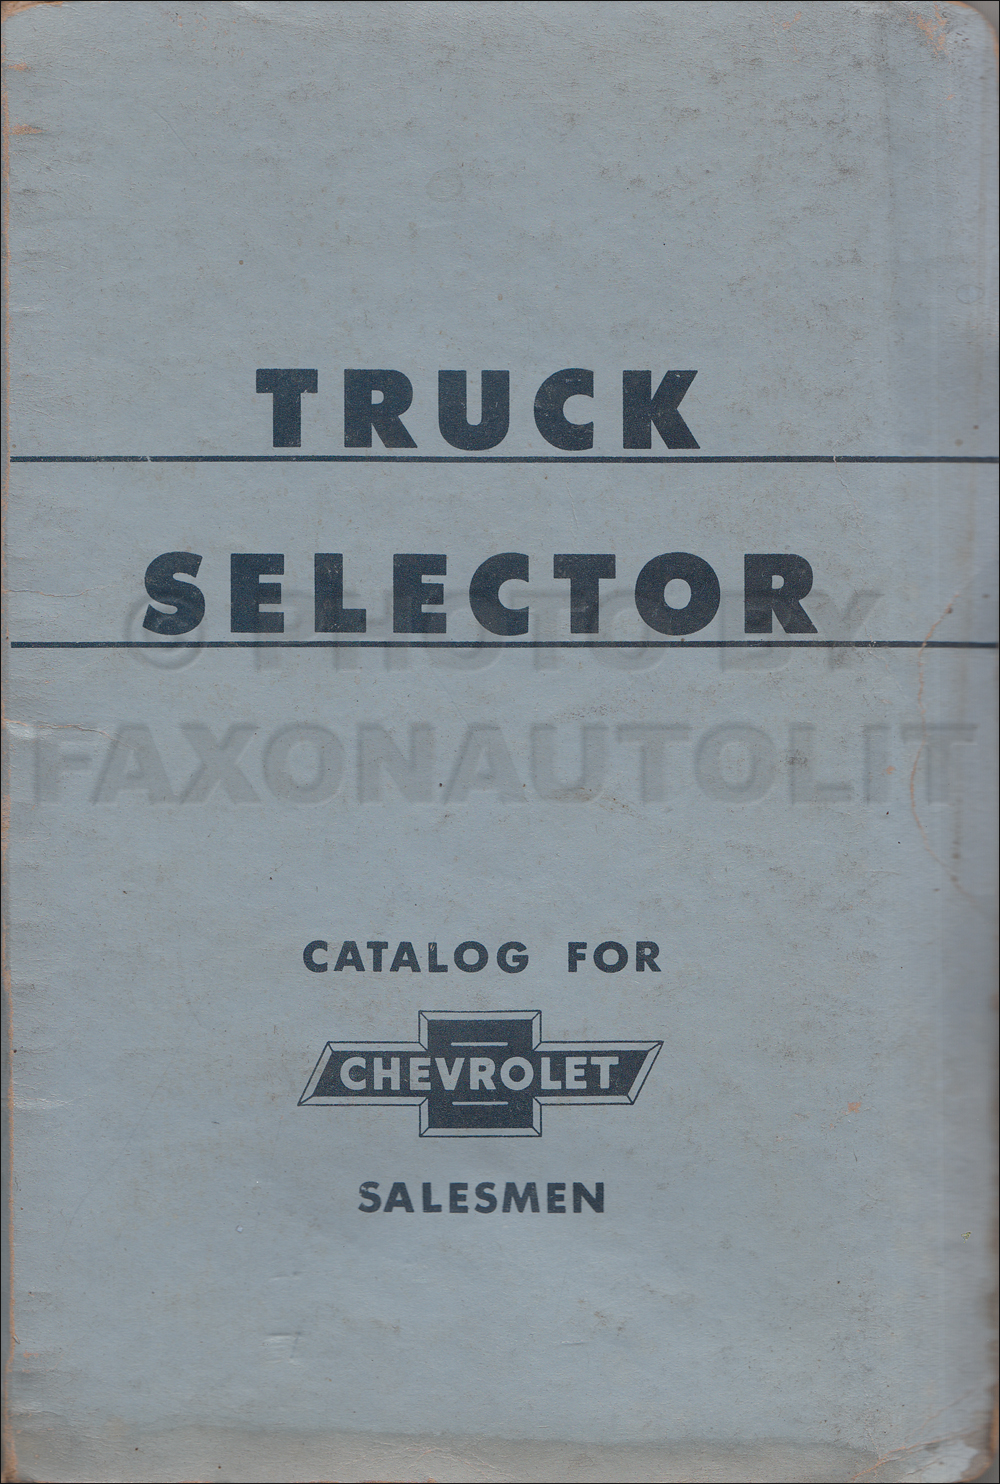 1957 Chevrolet Truck Selector Ordering Guide Dealer Album Original